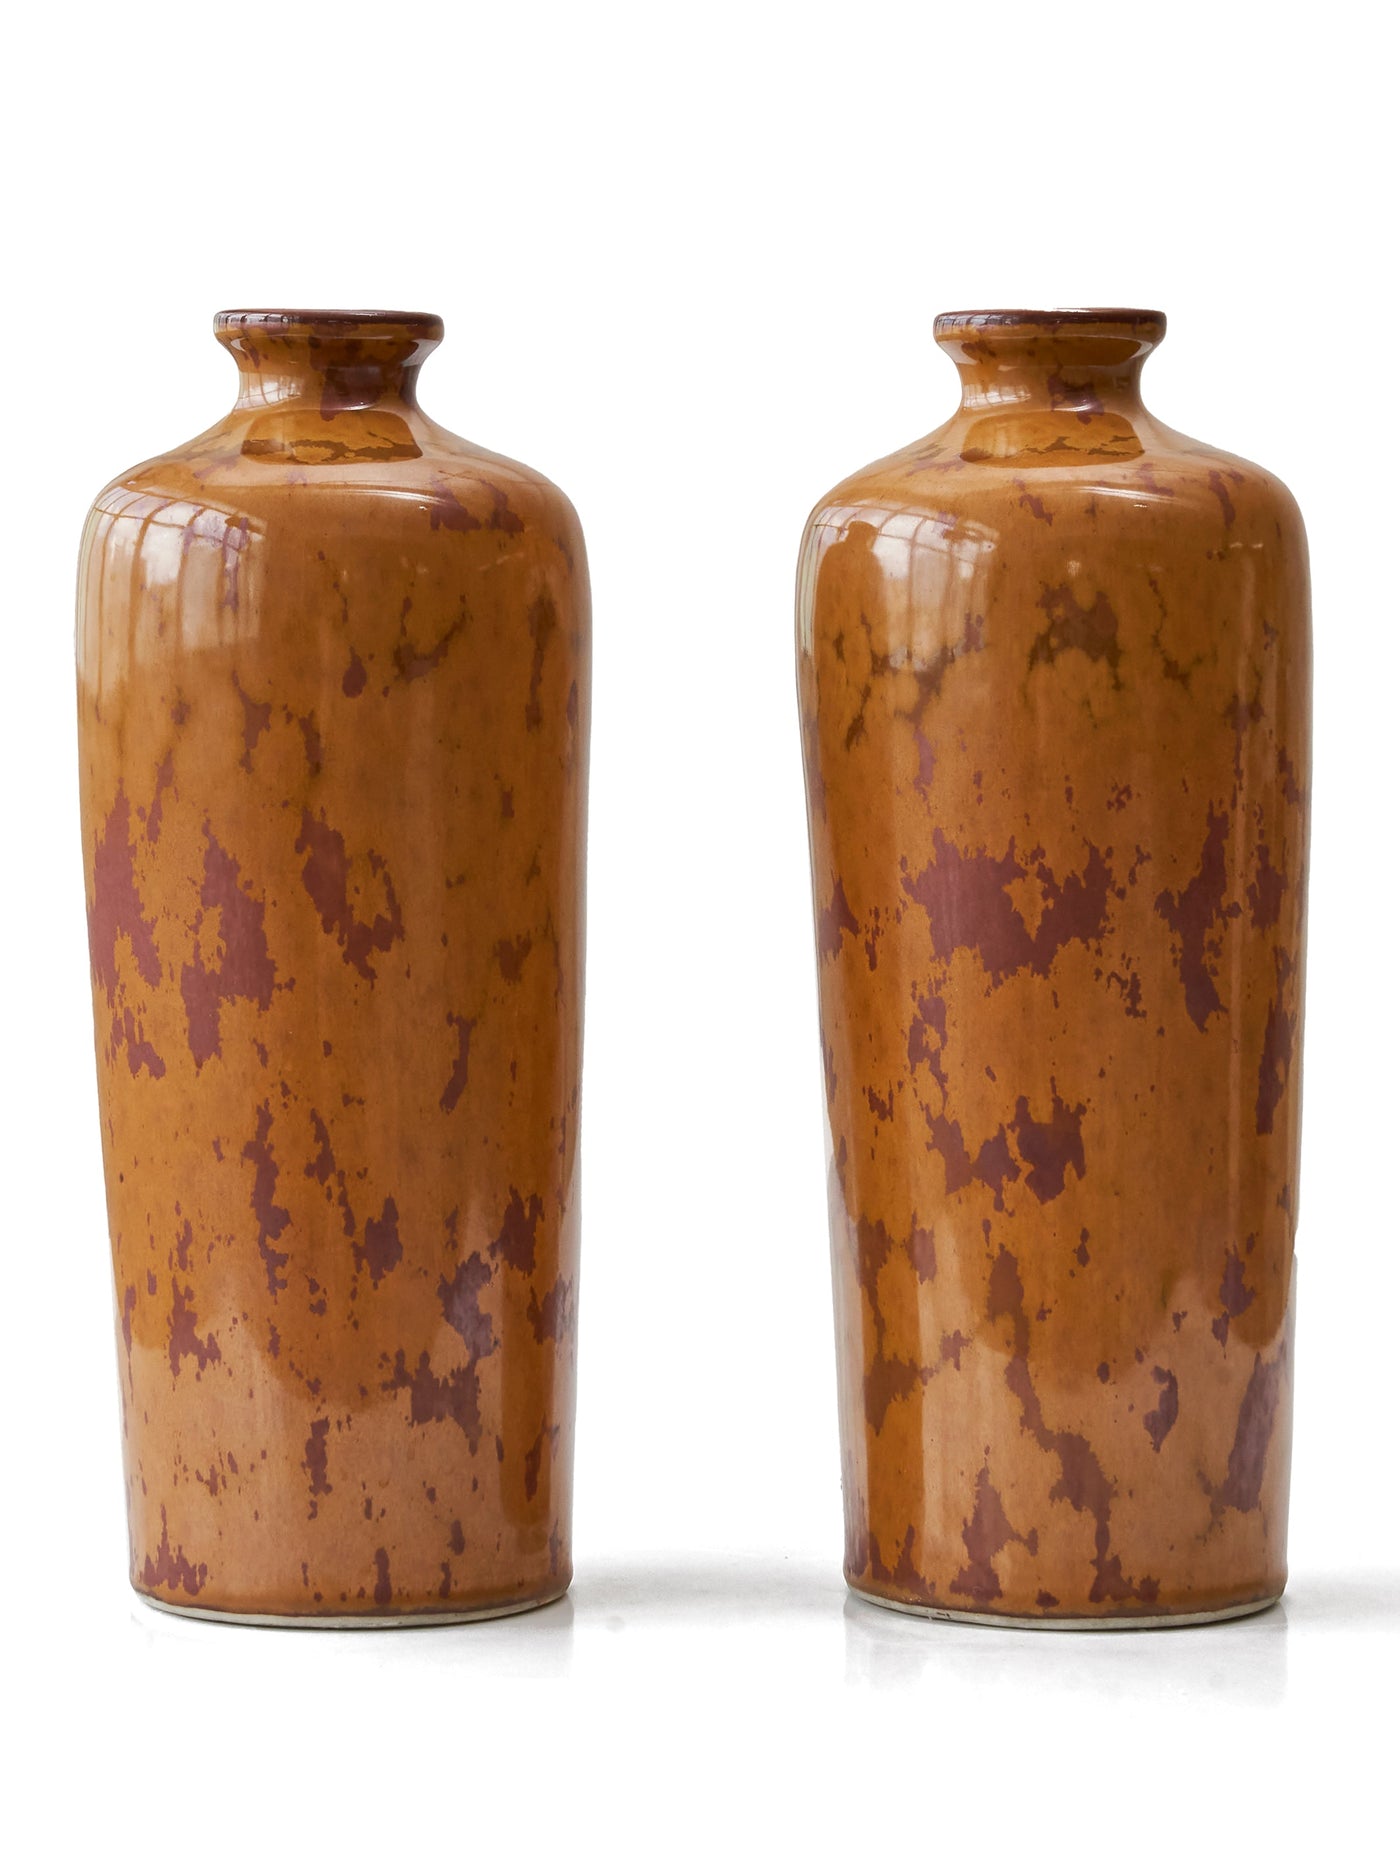 Pair of Vintage Chinese Amber Glazed Ceramic Vases